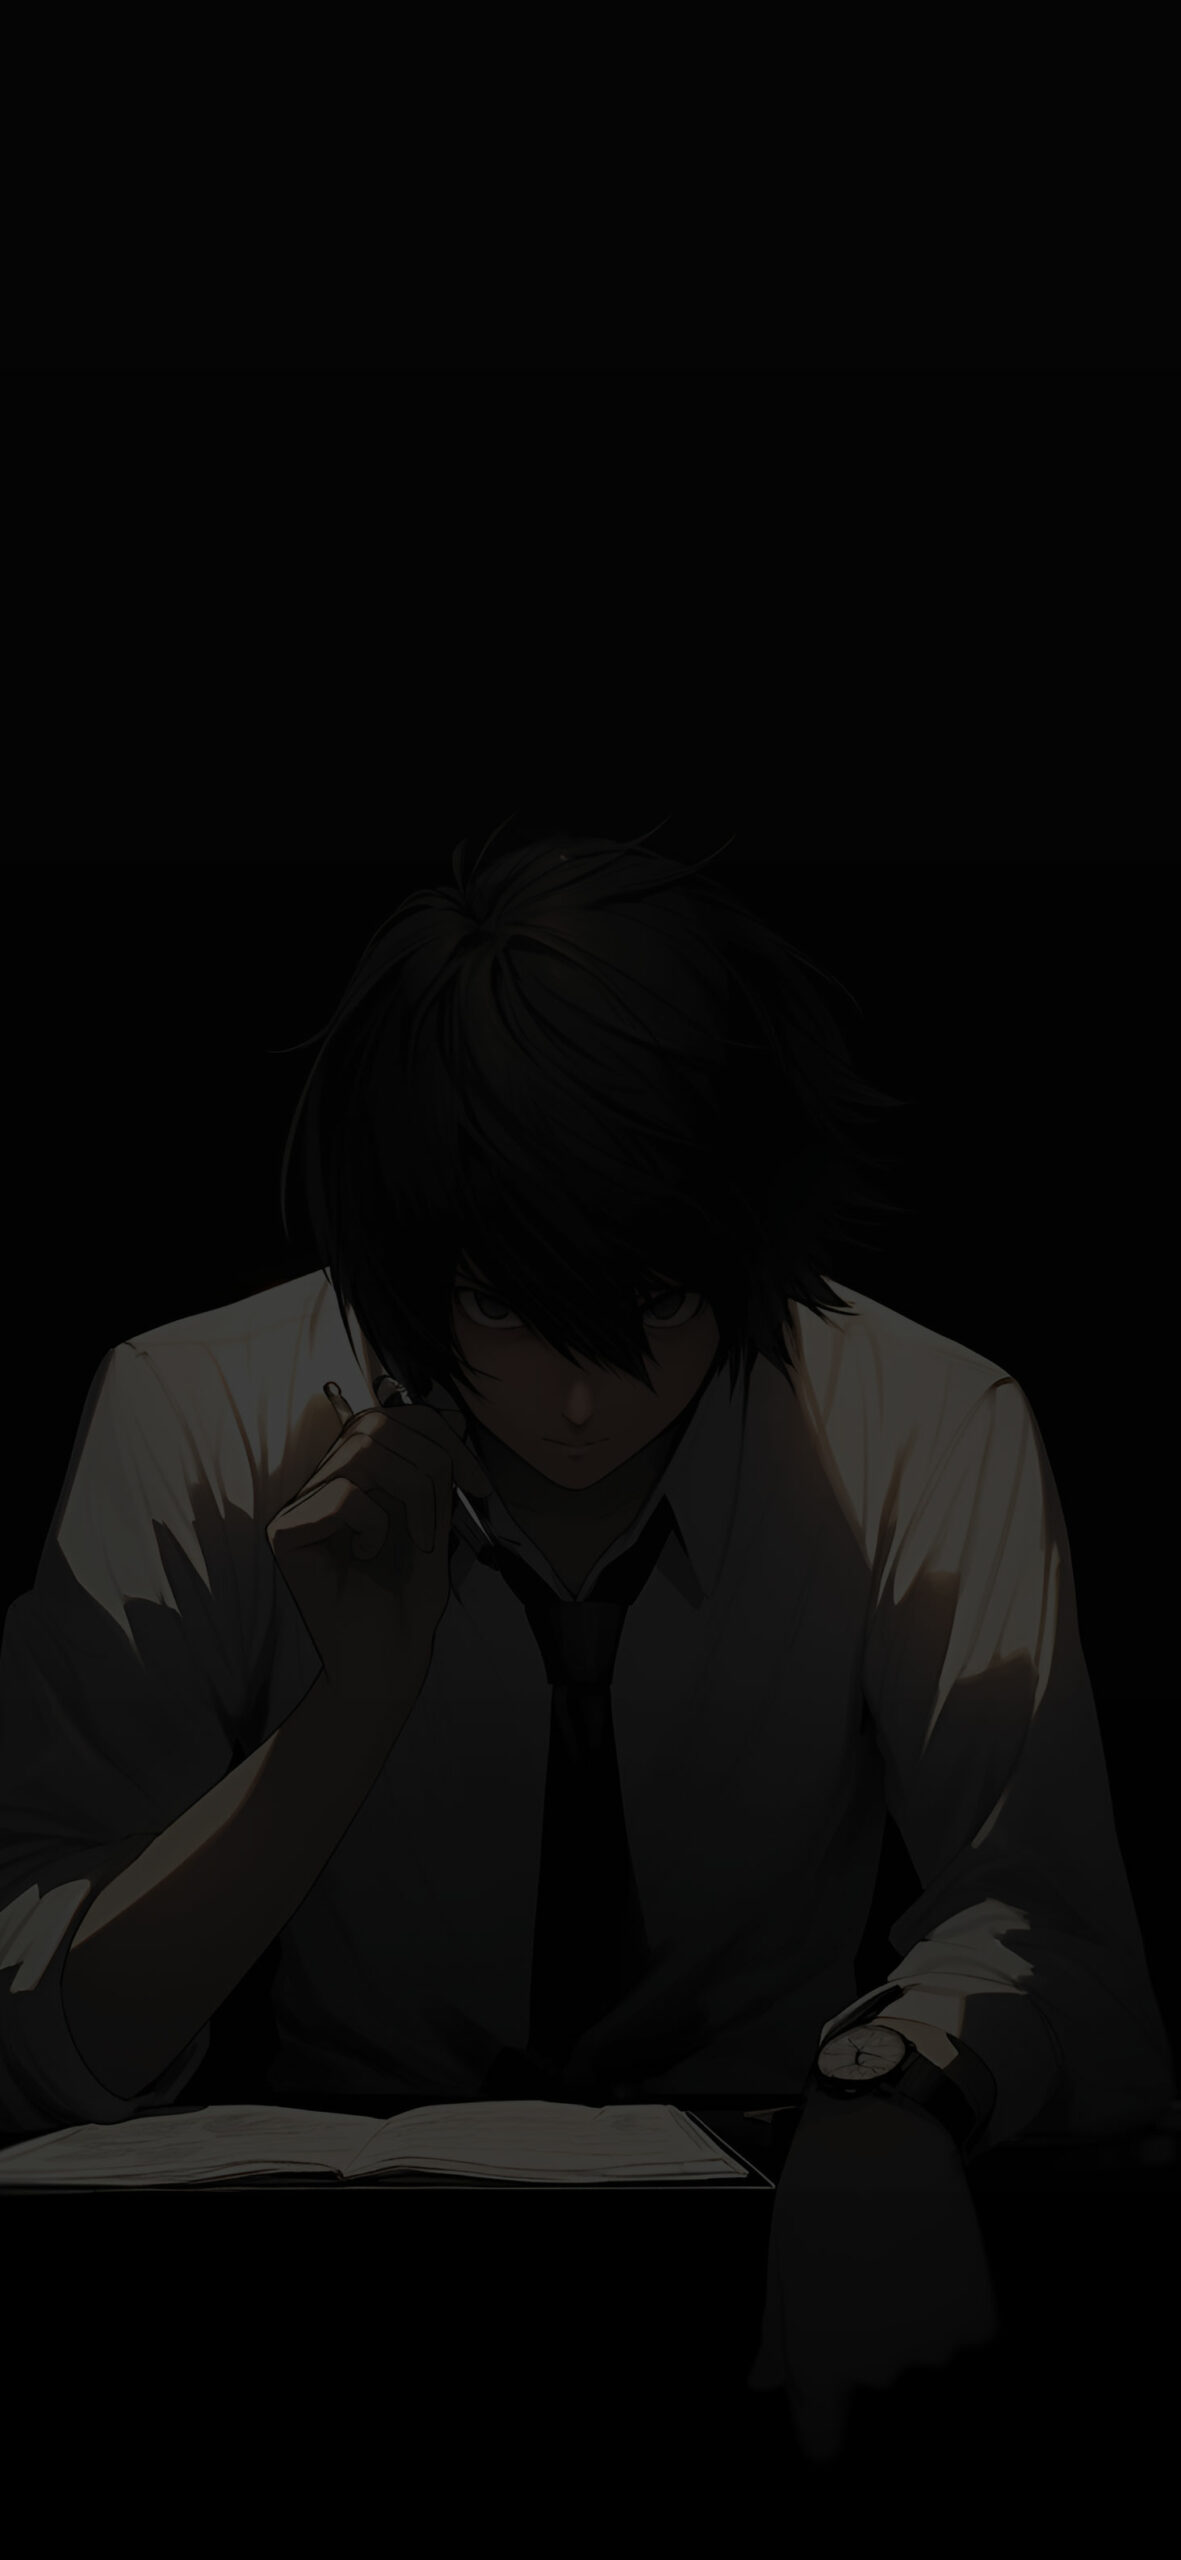 Dark Anime Scenery Wallpaper Hd Cool Backgrounds | Dark Anim… | Flickr